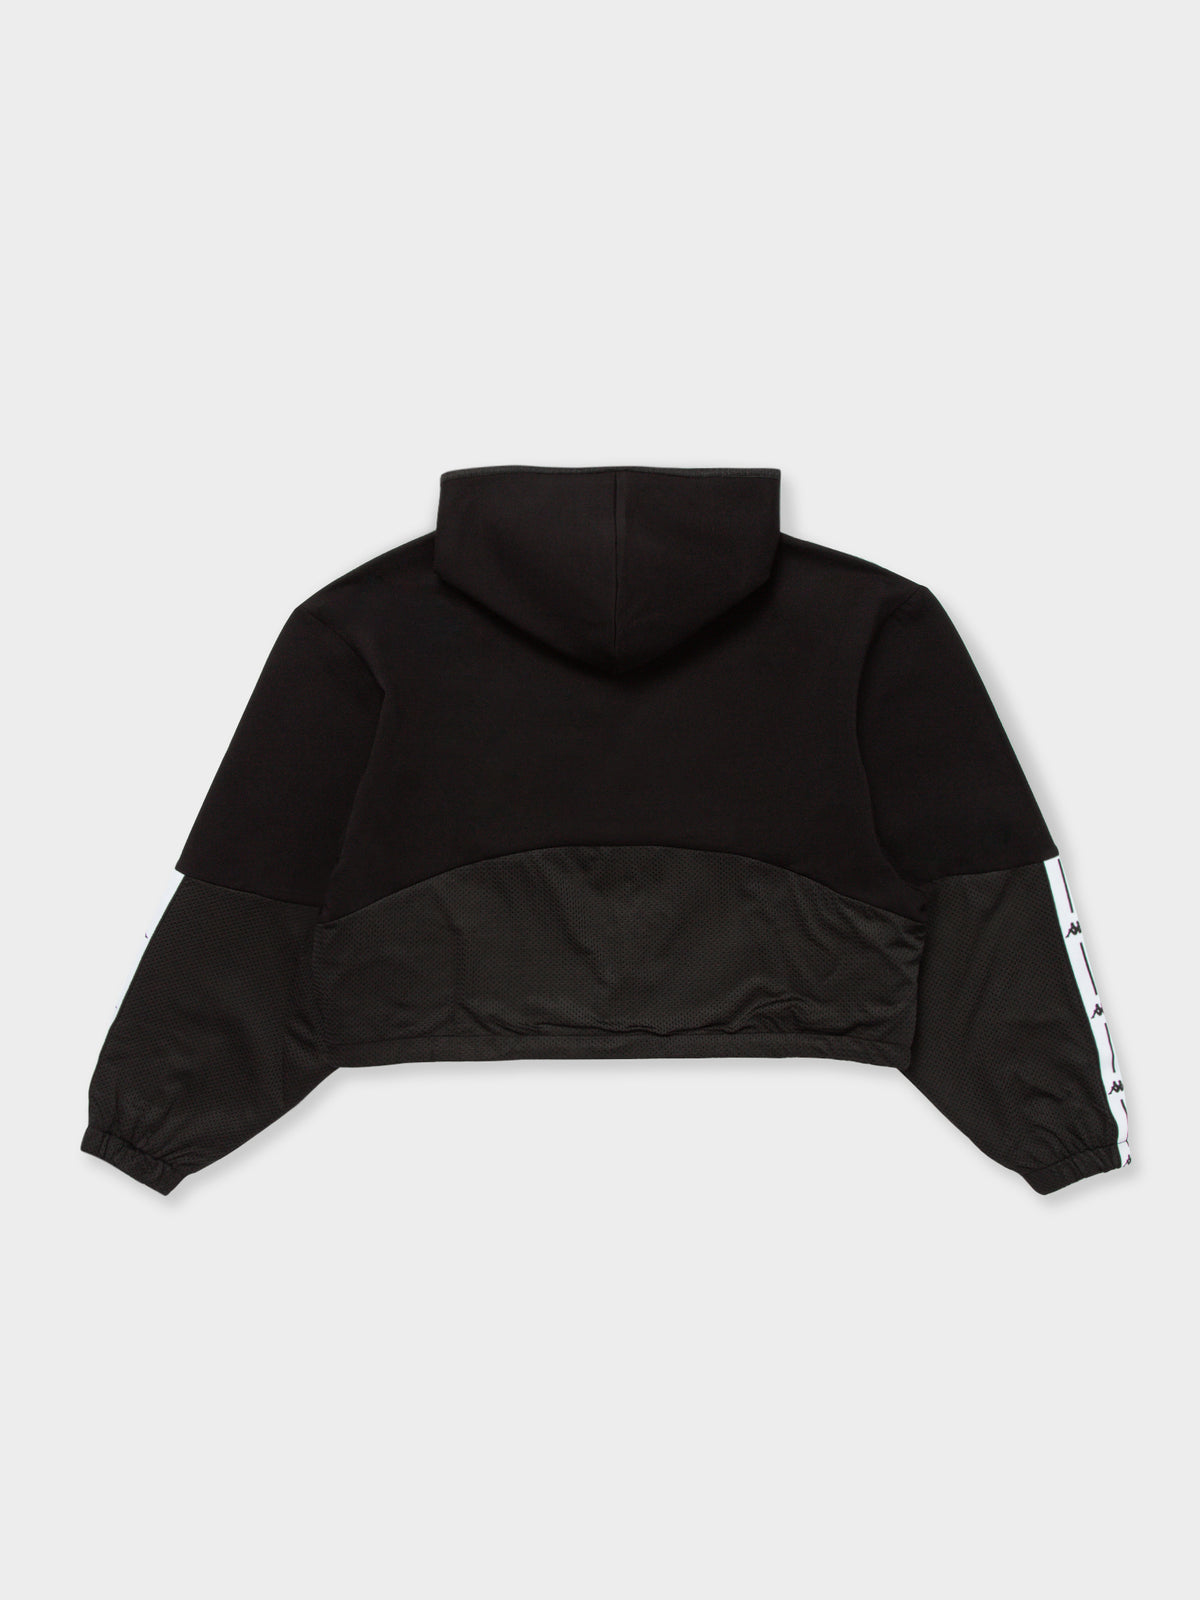 Authentic JPN Camaline Hooded Pullover in Black